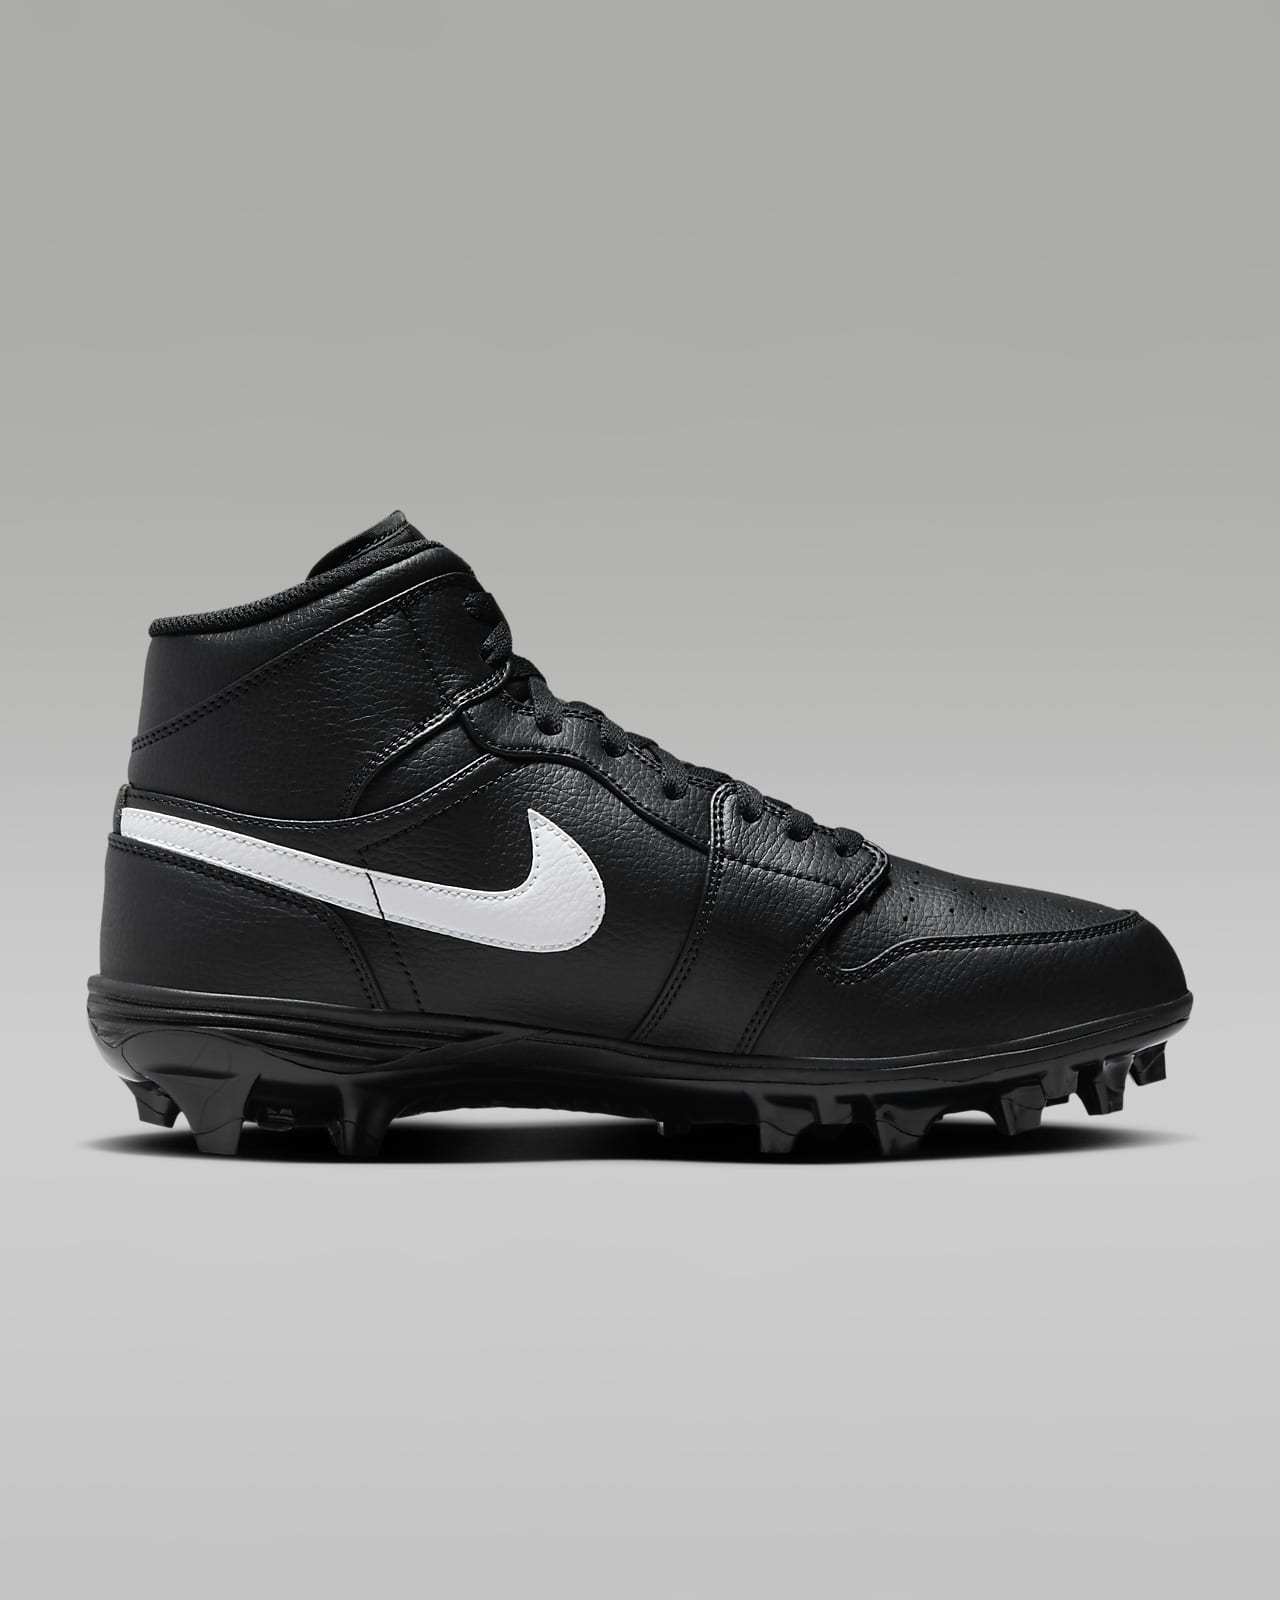 Jordan 1 Mid TD Black/White Men's Football Cleat Shoes, Size: 8.5